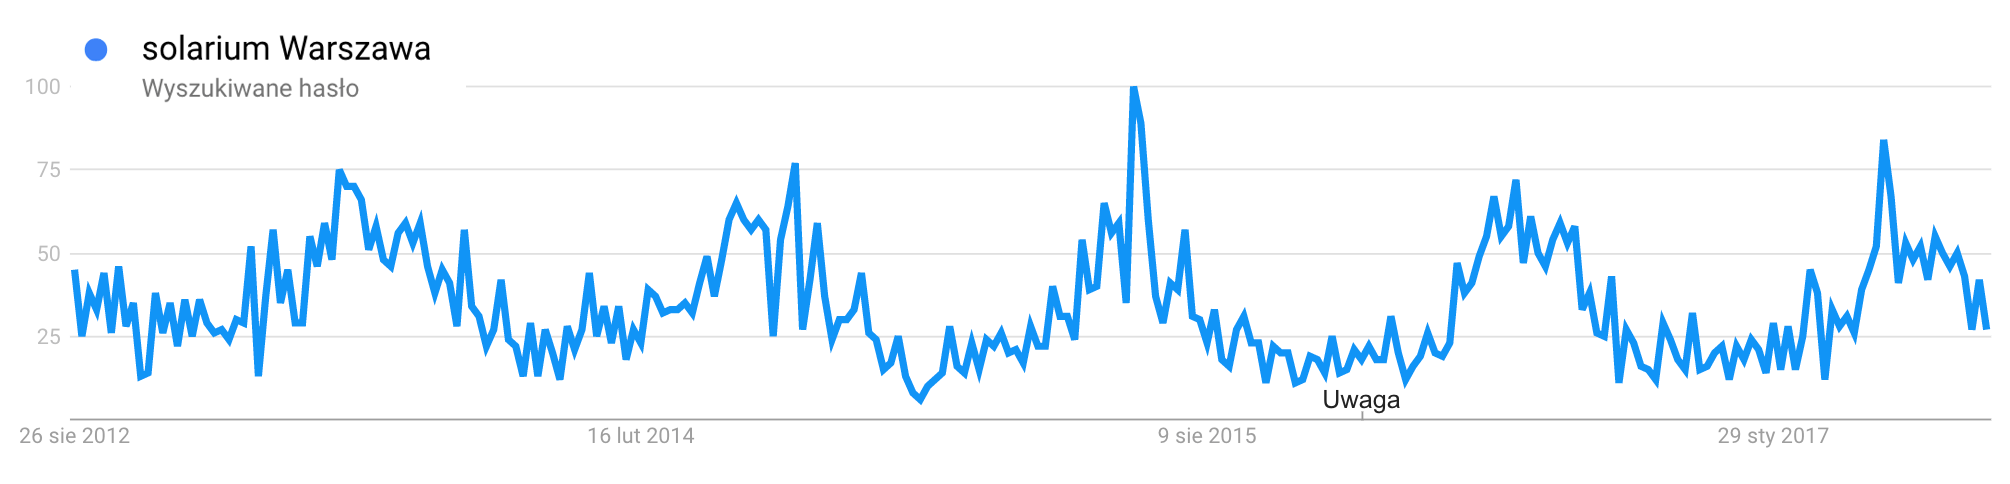 Google Trends - Solarium Warszawa